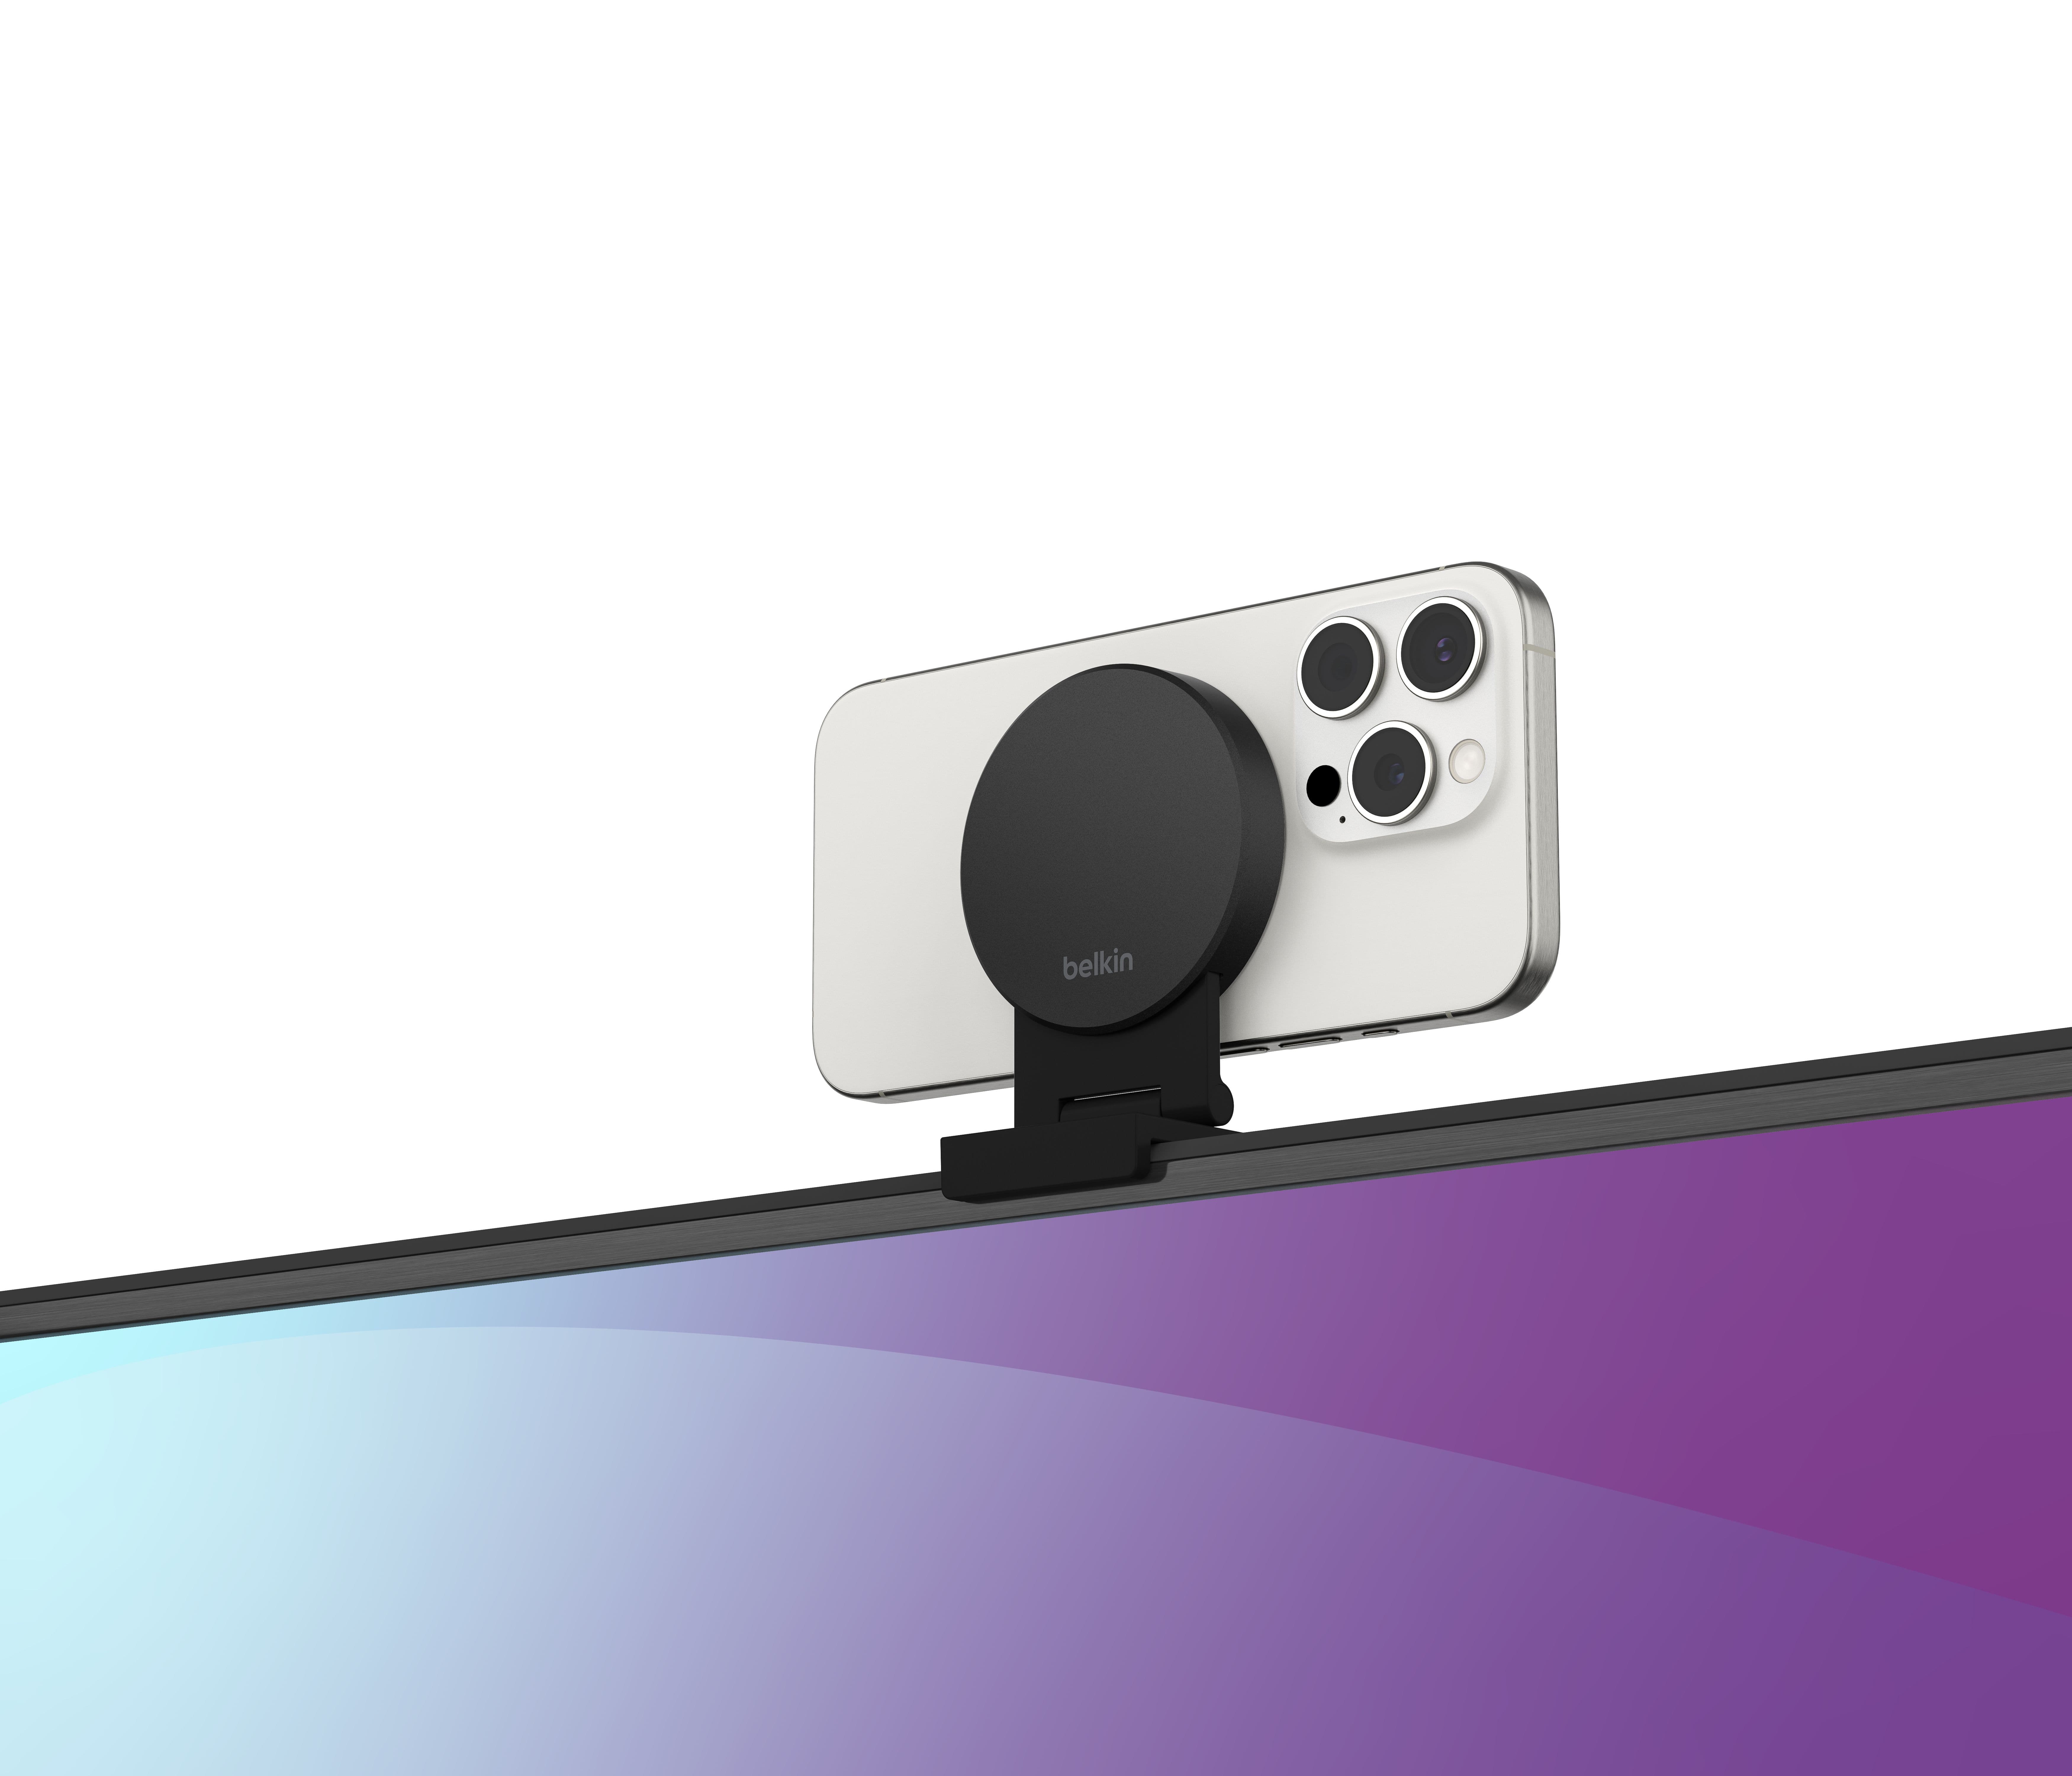 Belkin's new Continuity Camera mount for Apple TV 4K.